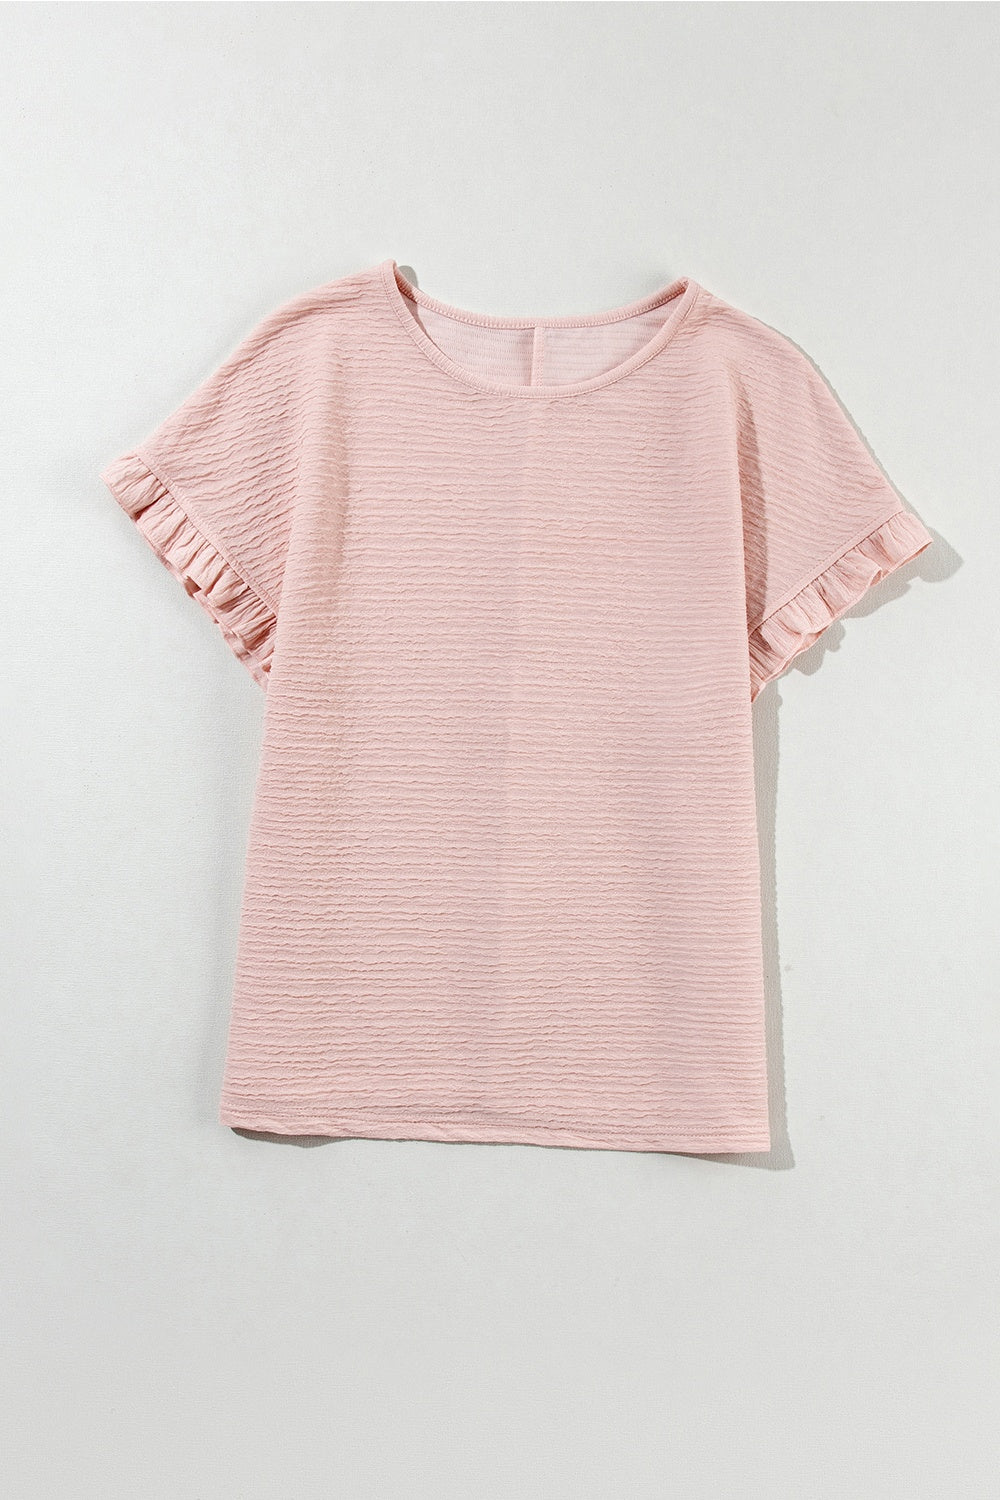 Round Neck Frill Short Sleeve T-Shirt Trendsi